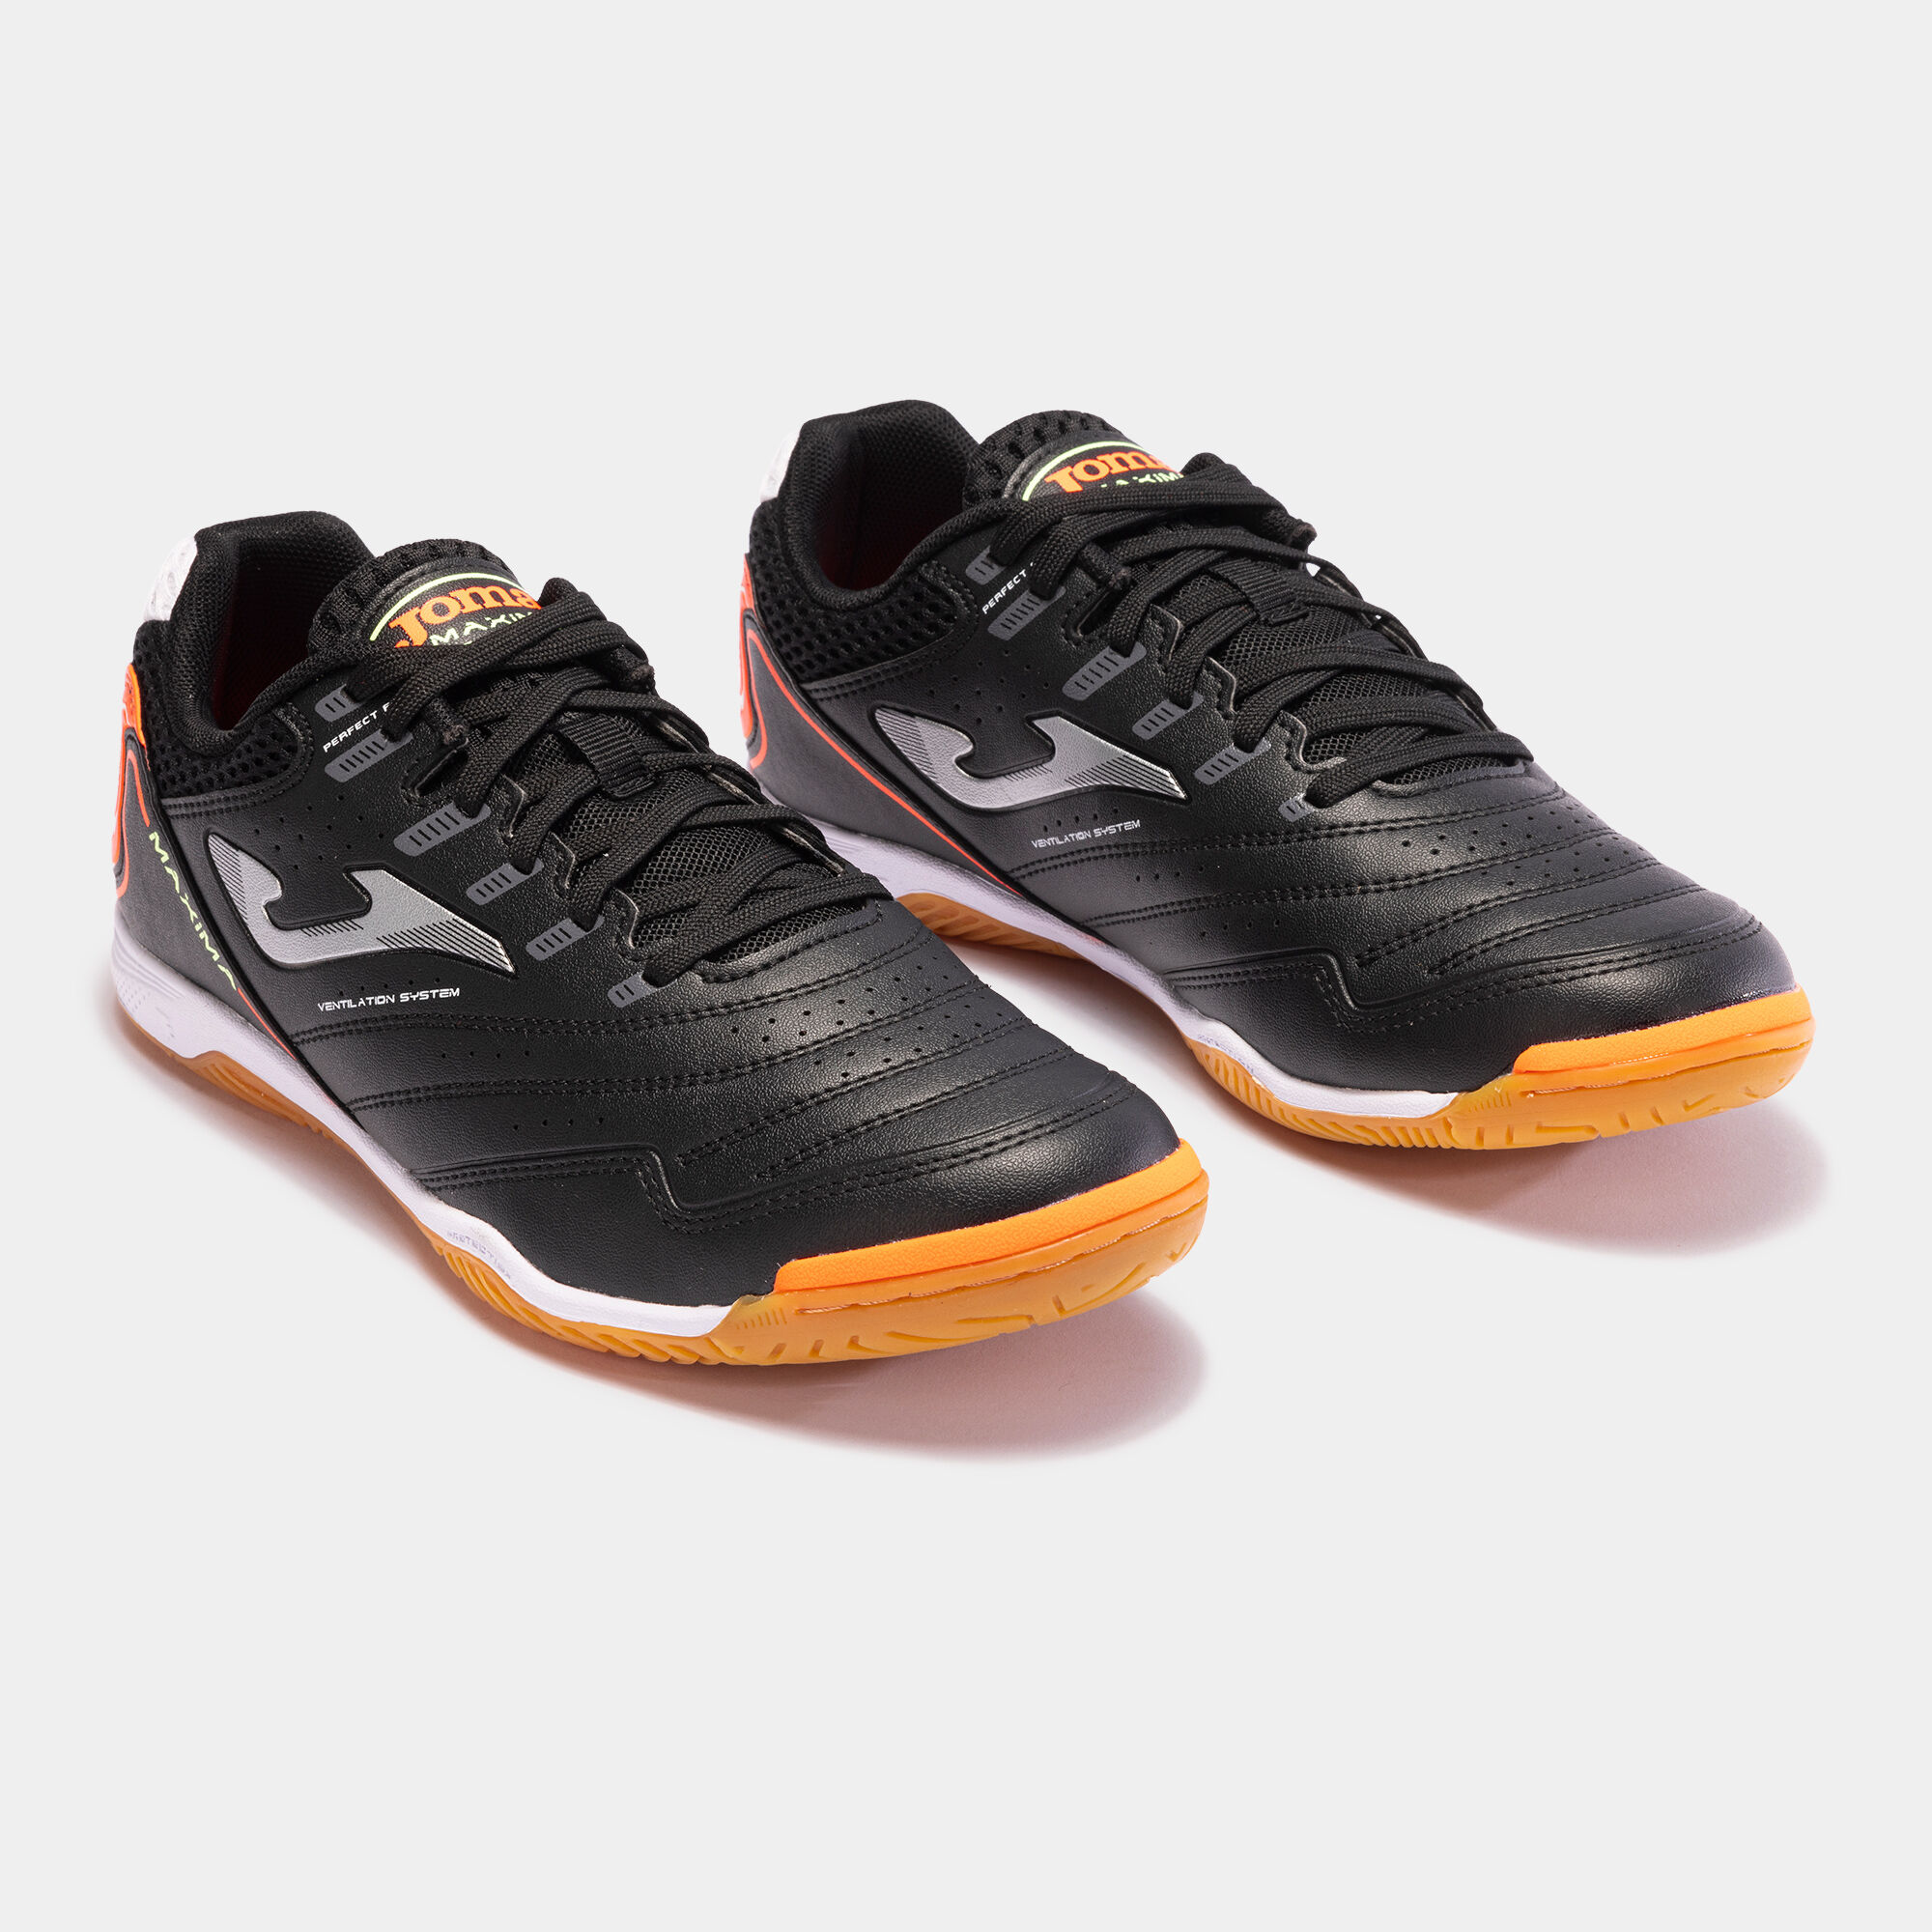 Chaussures futsal Maxima 23 indoor noir orange